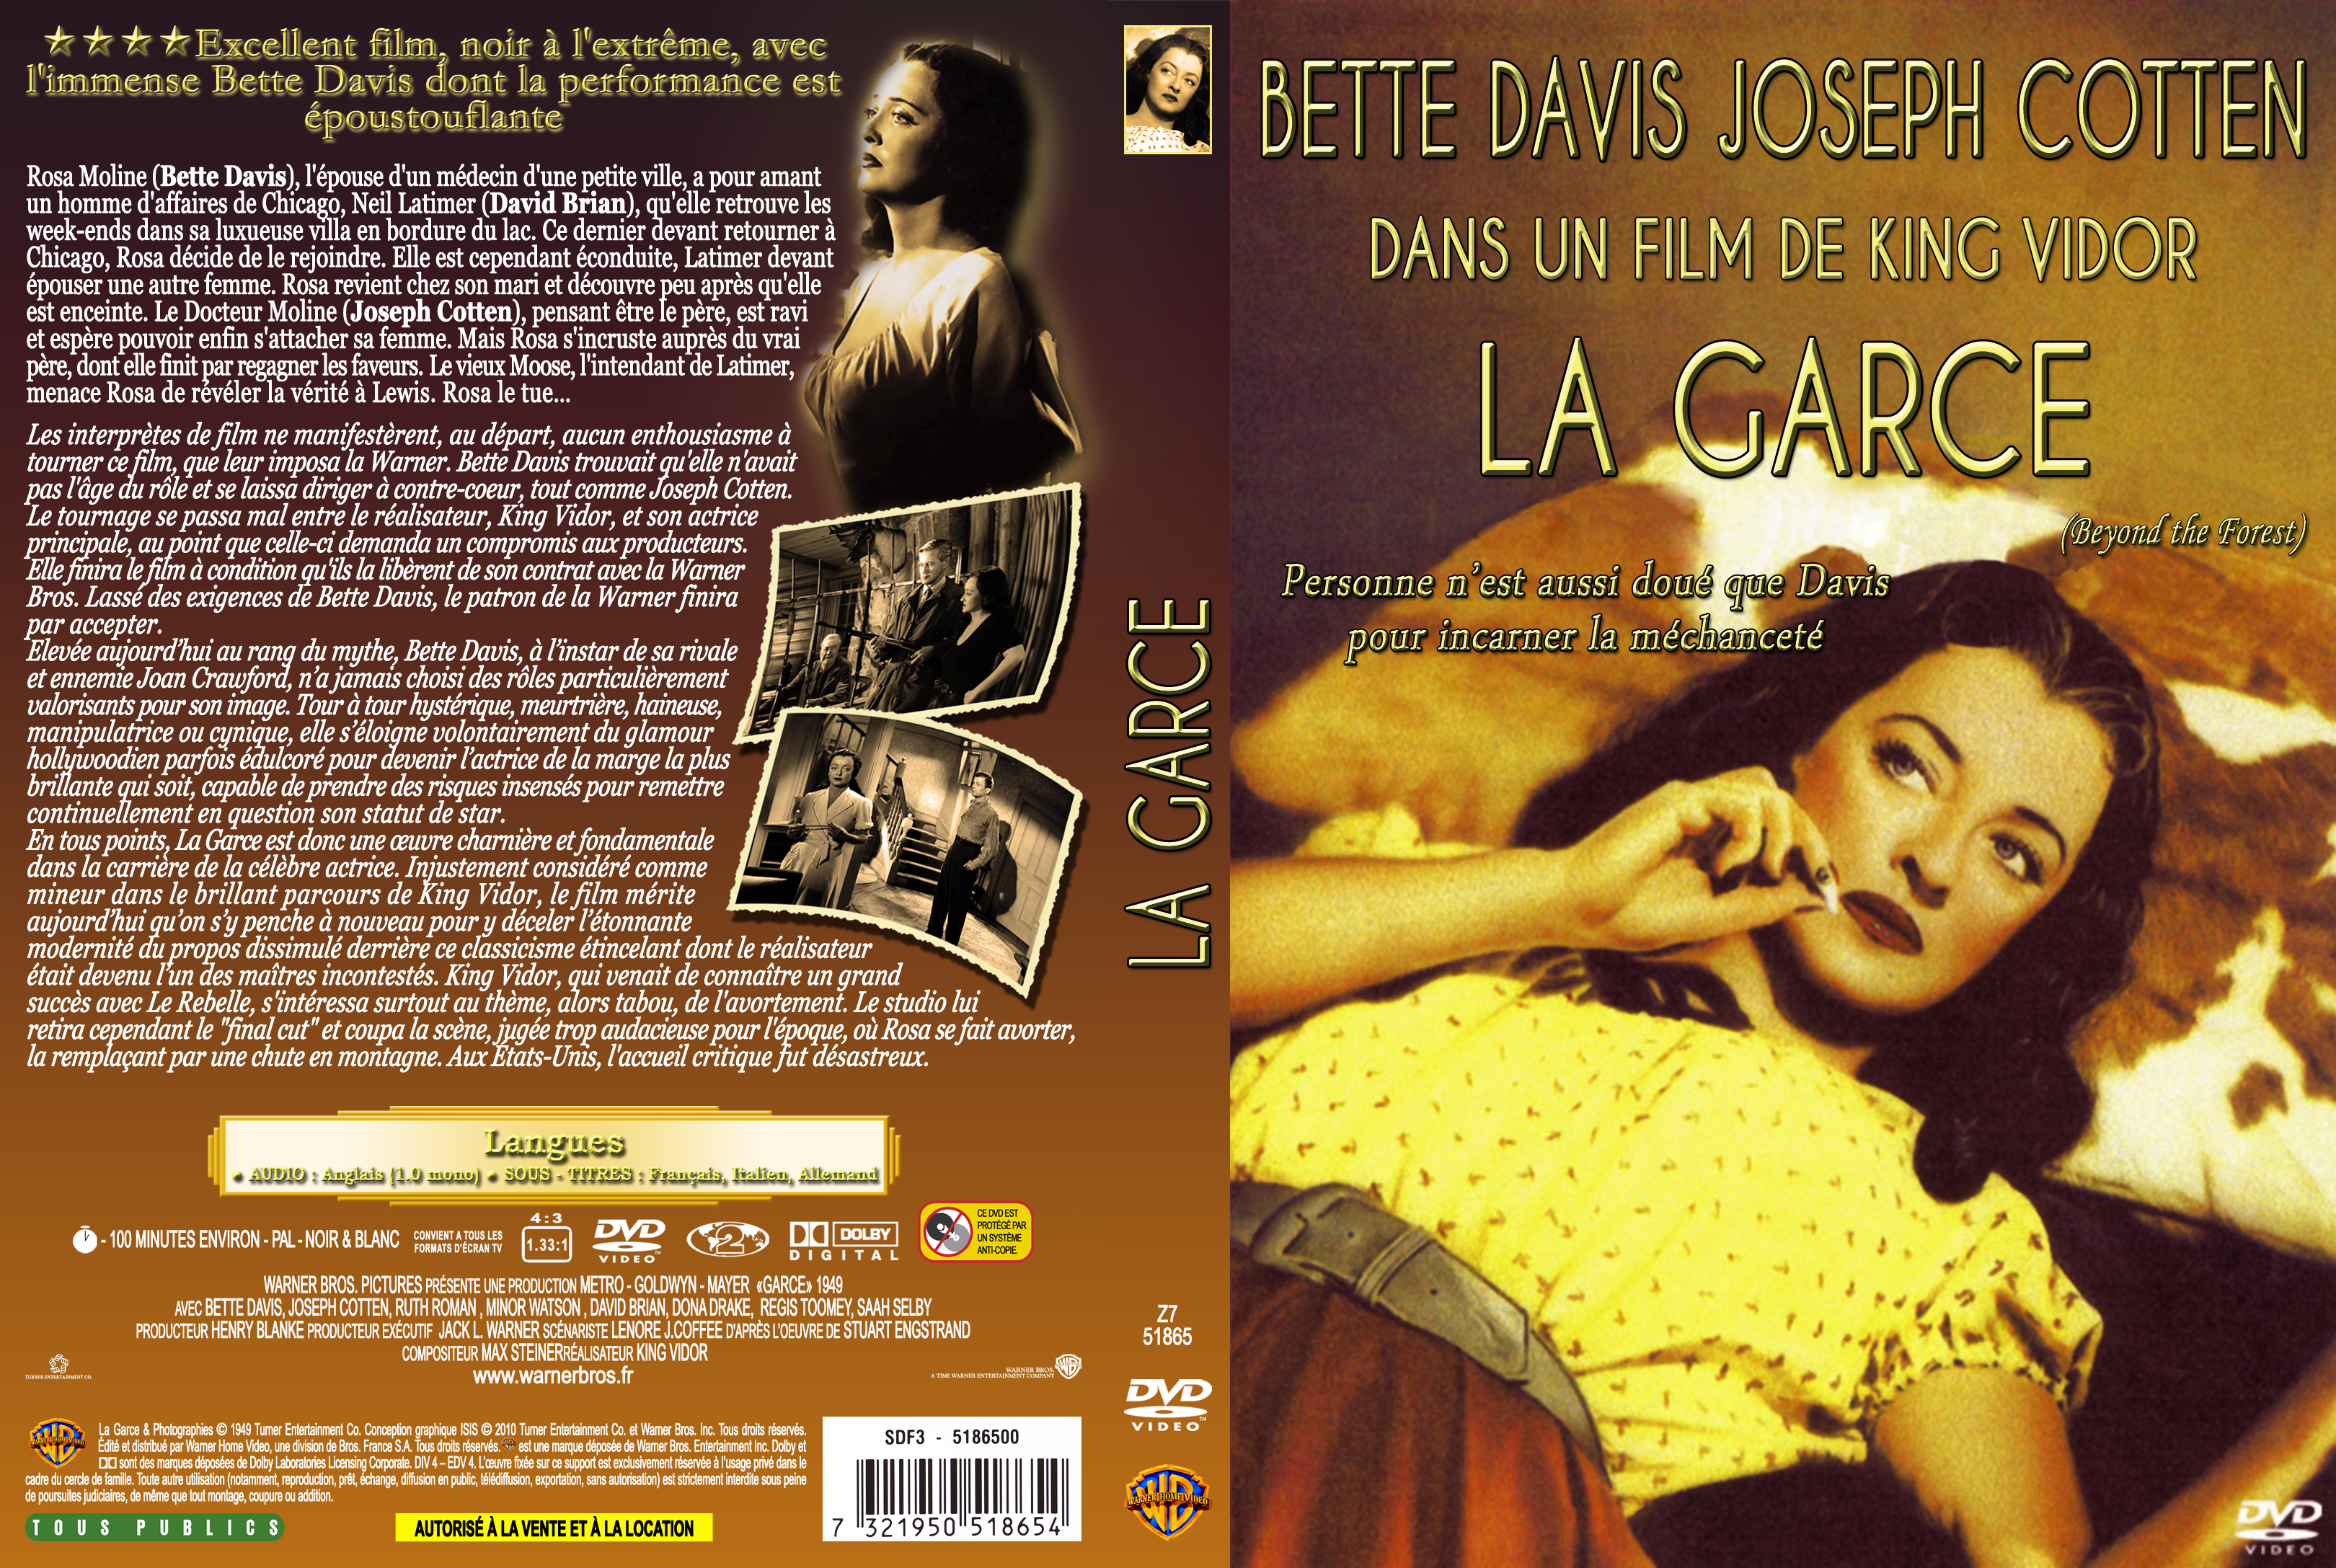 Jaquette DVD La garce custom